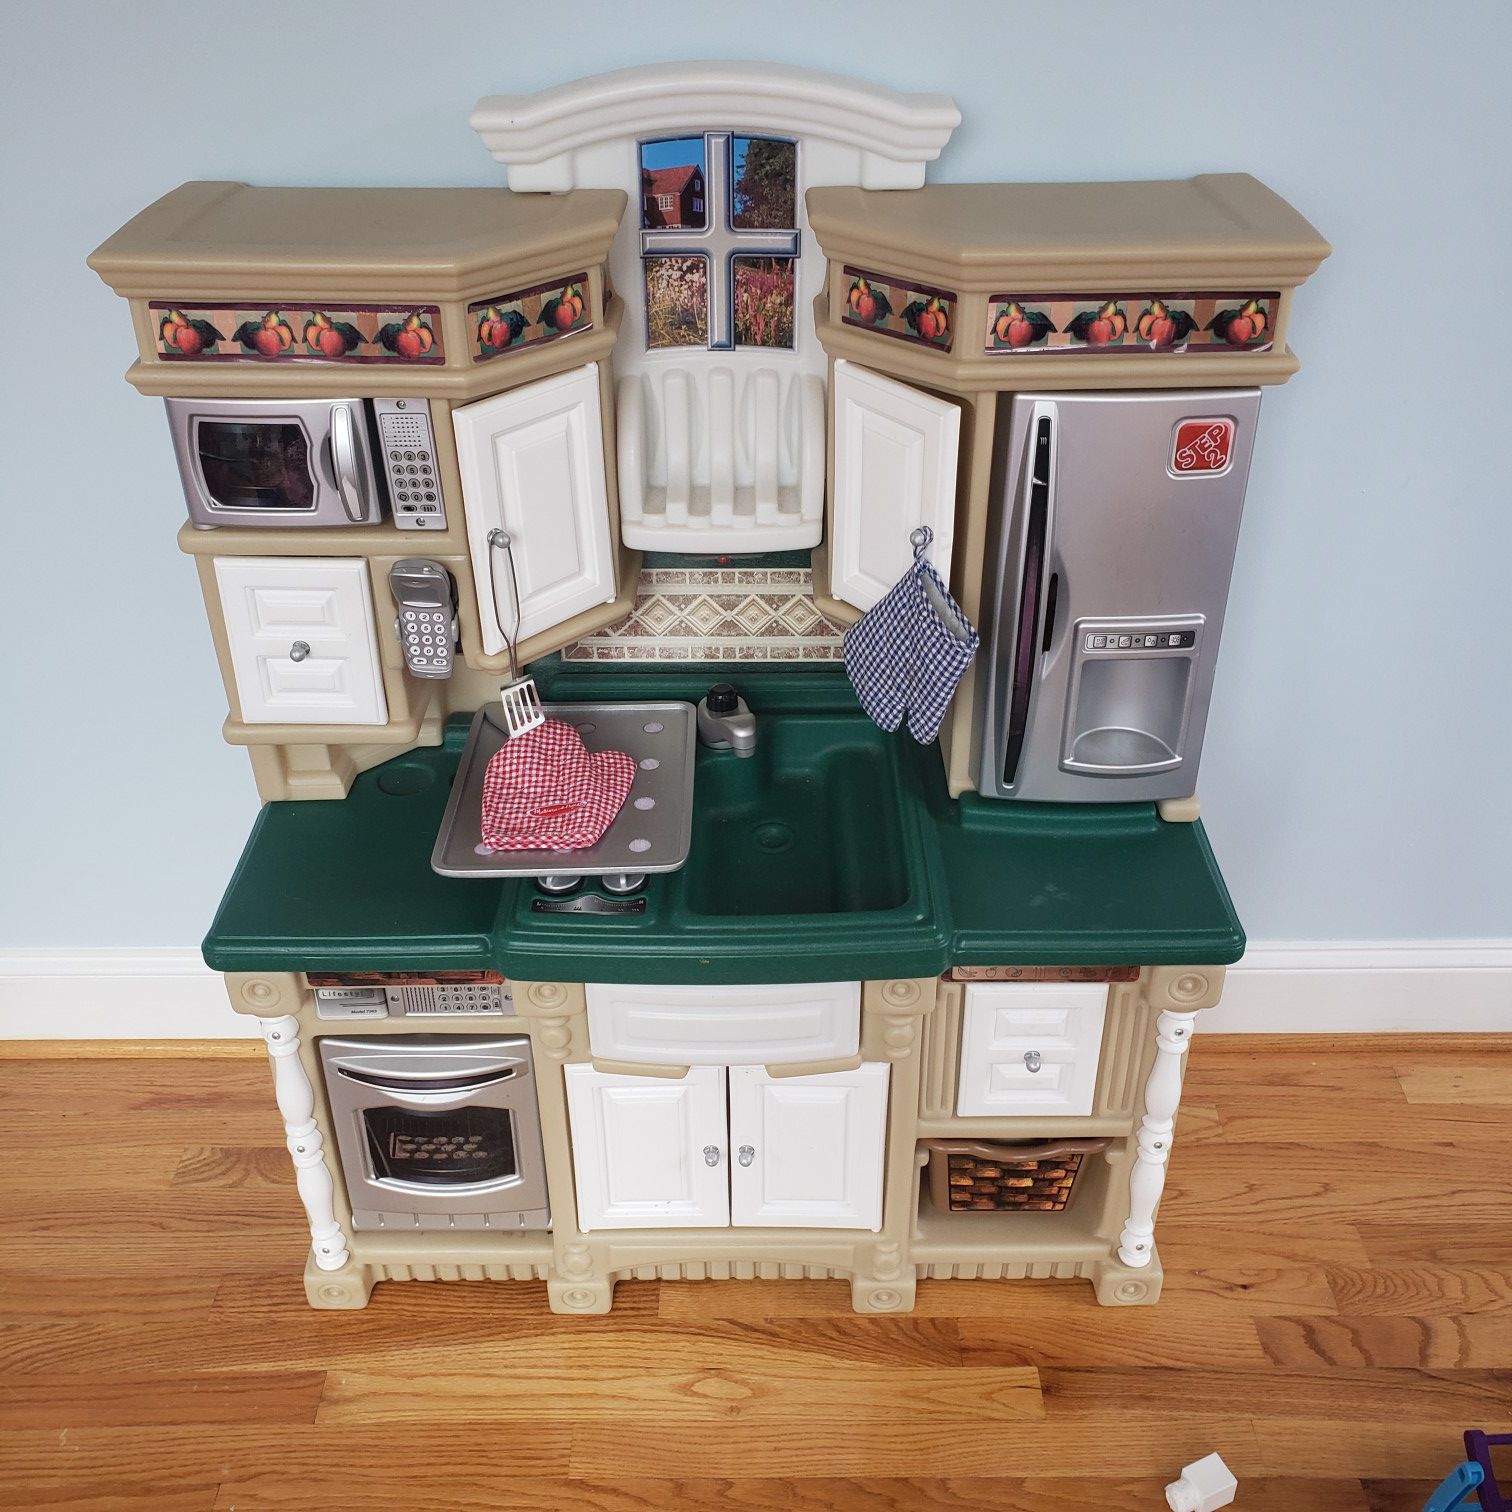 Kids kitchen set